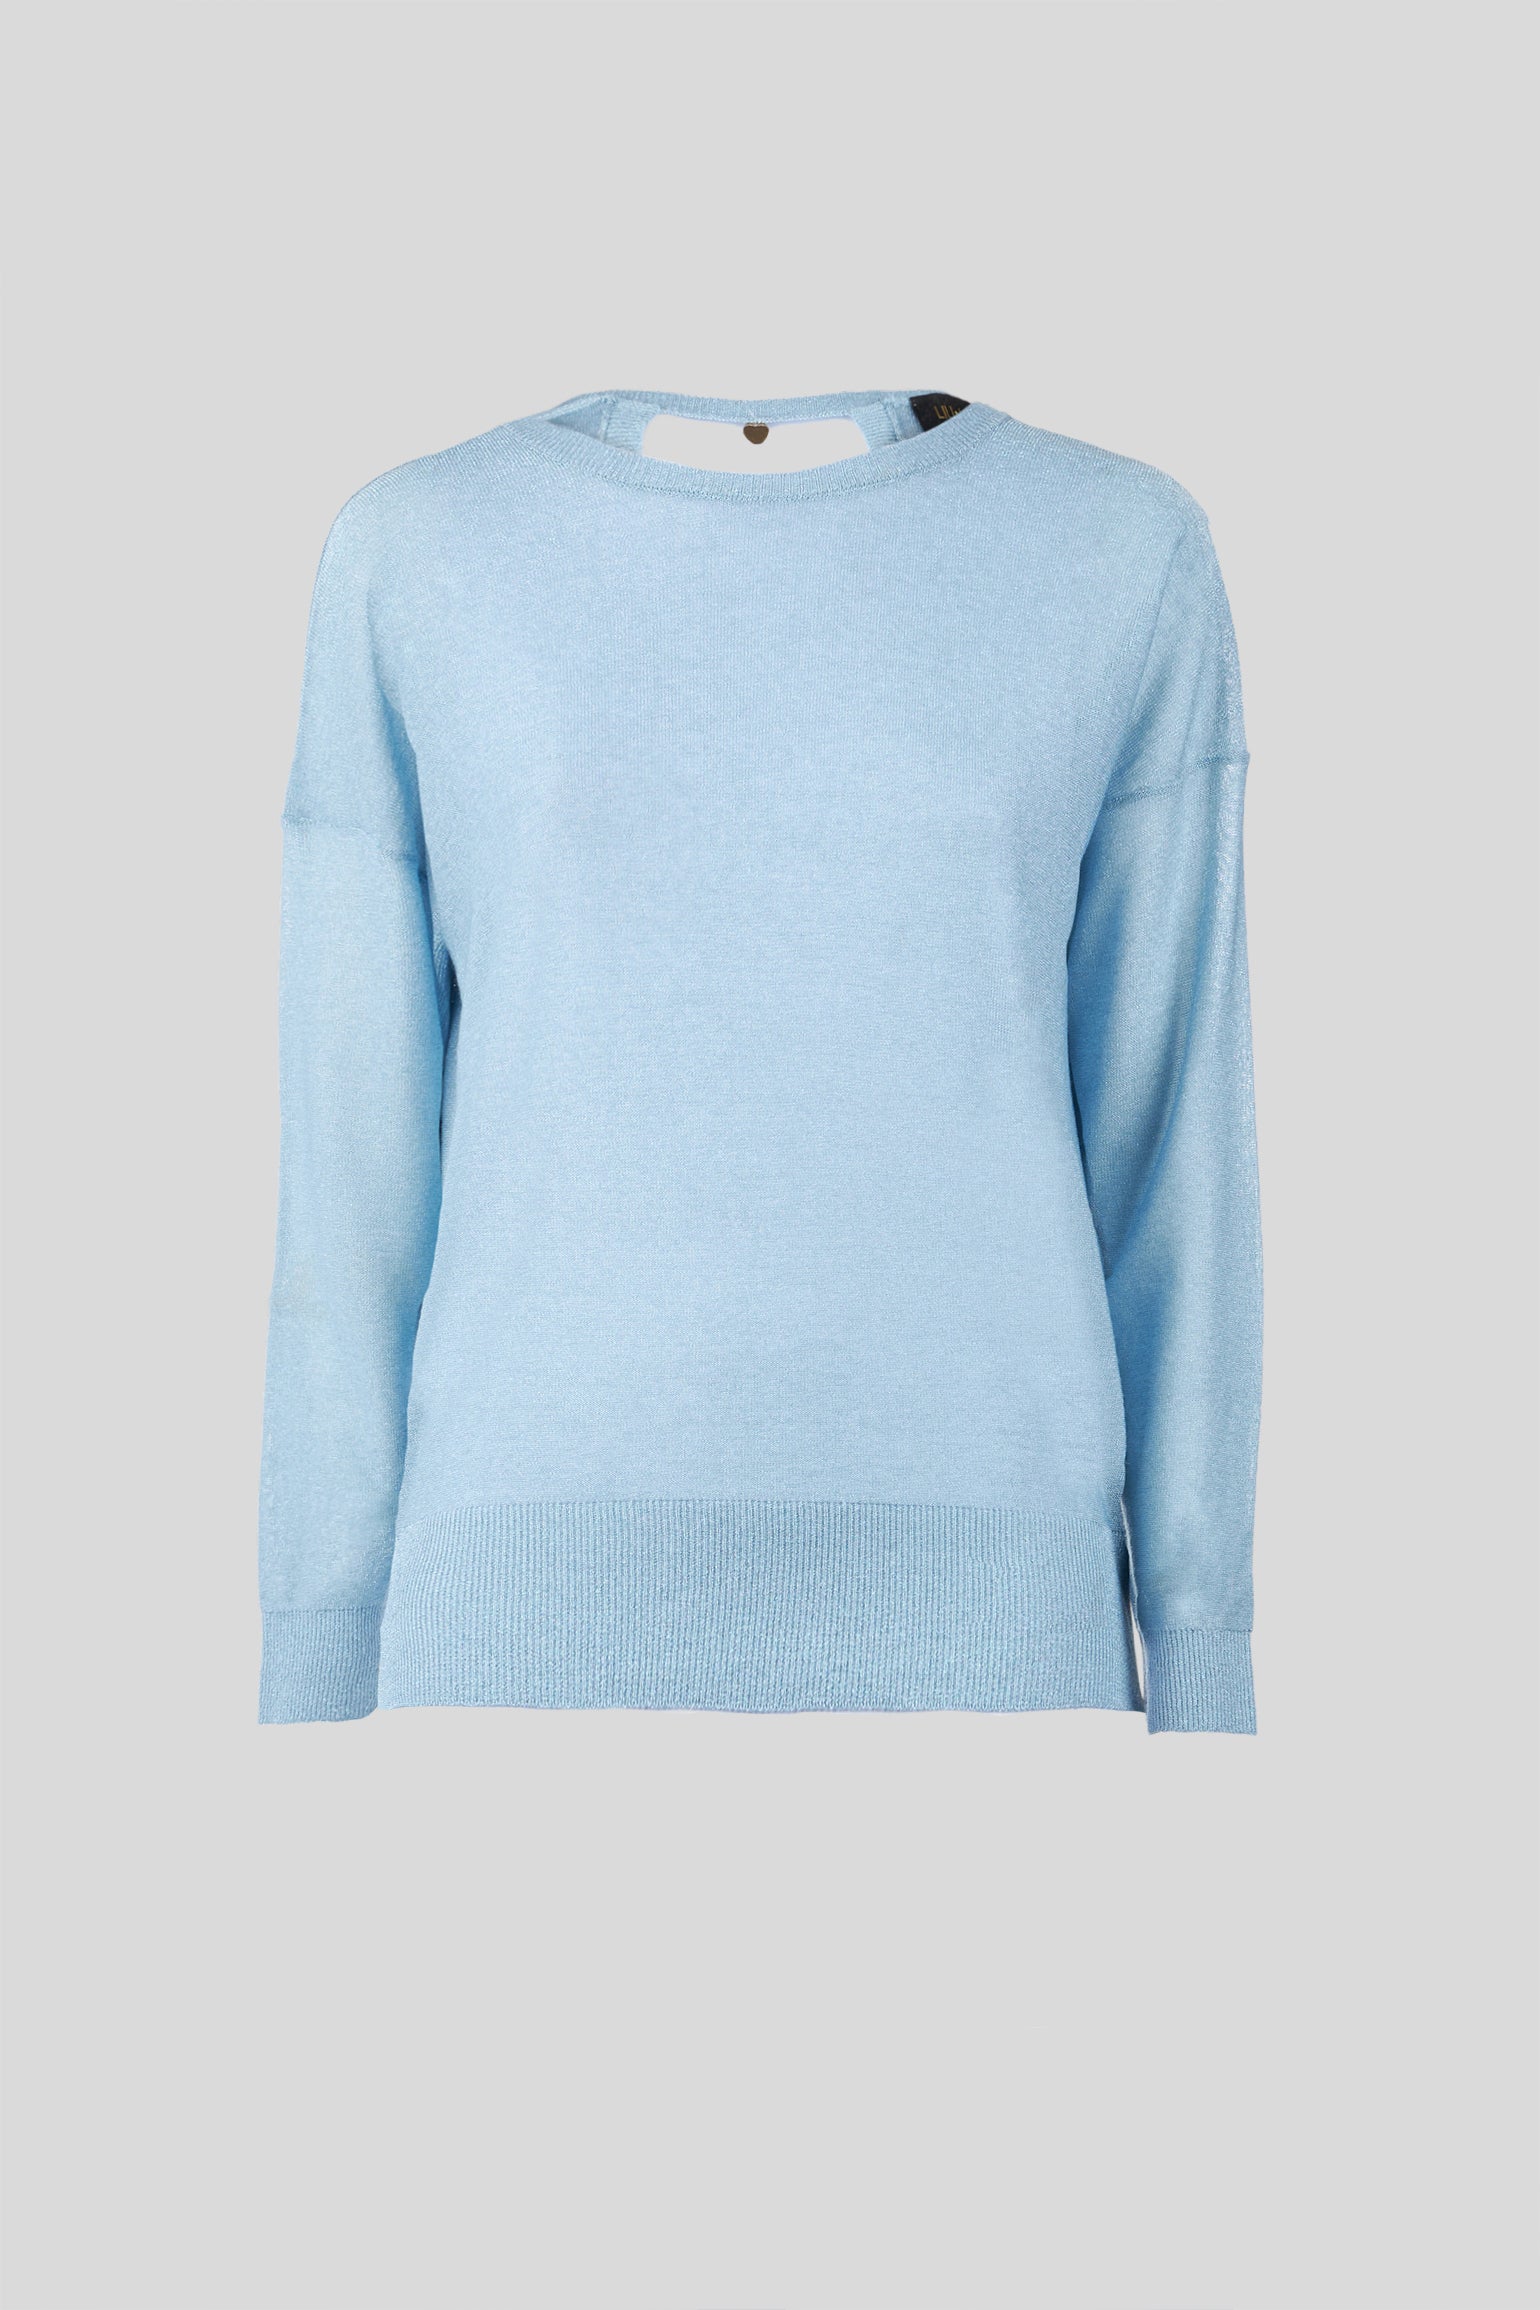 LIU JO Blue Lurex Sweater